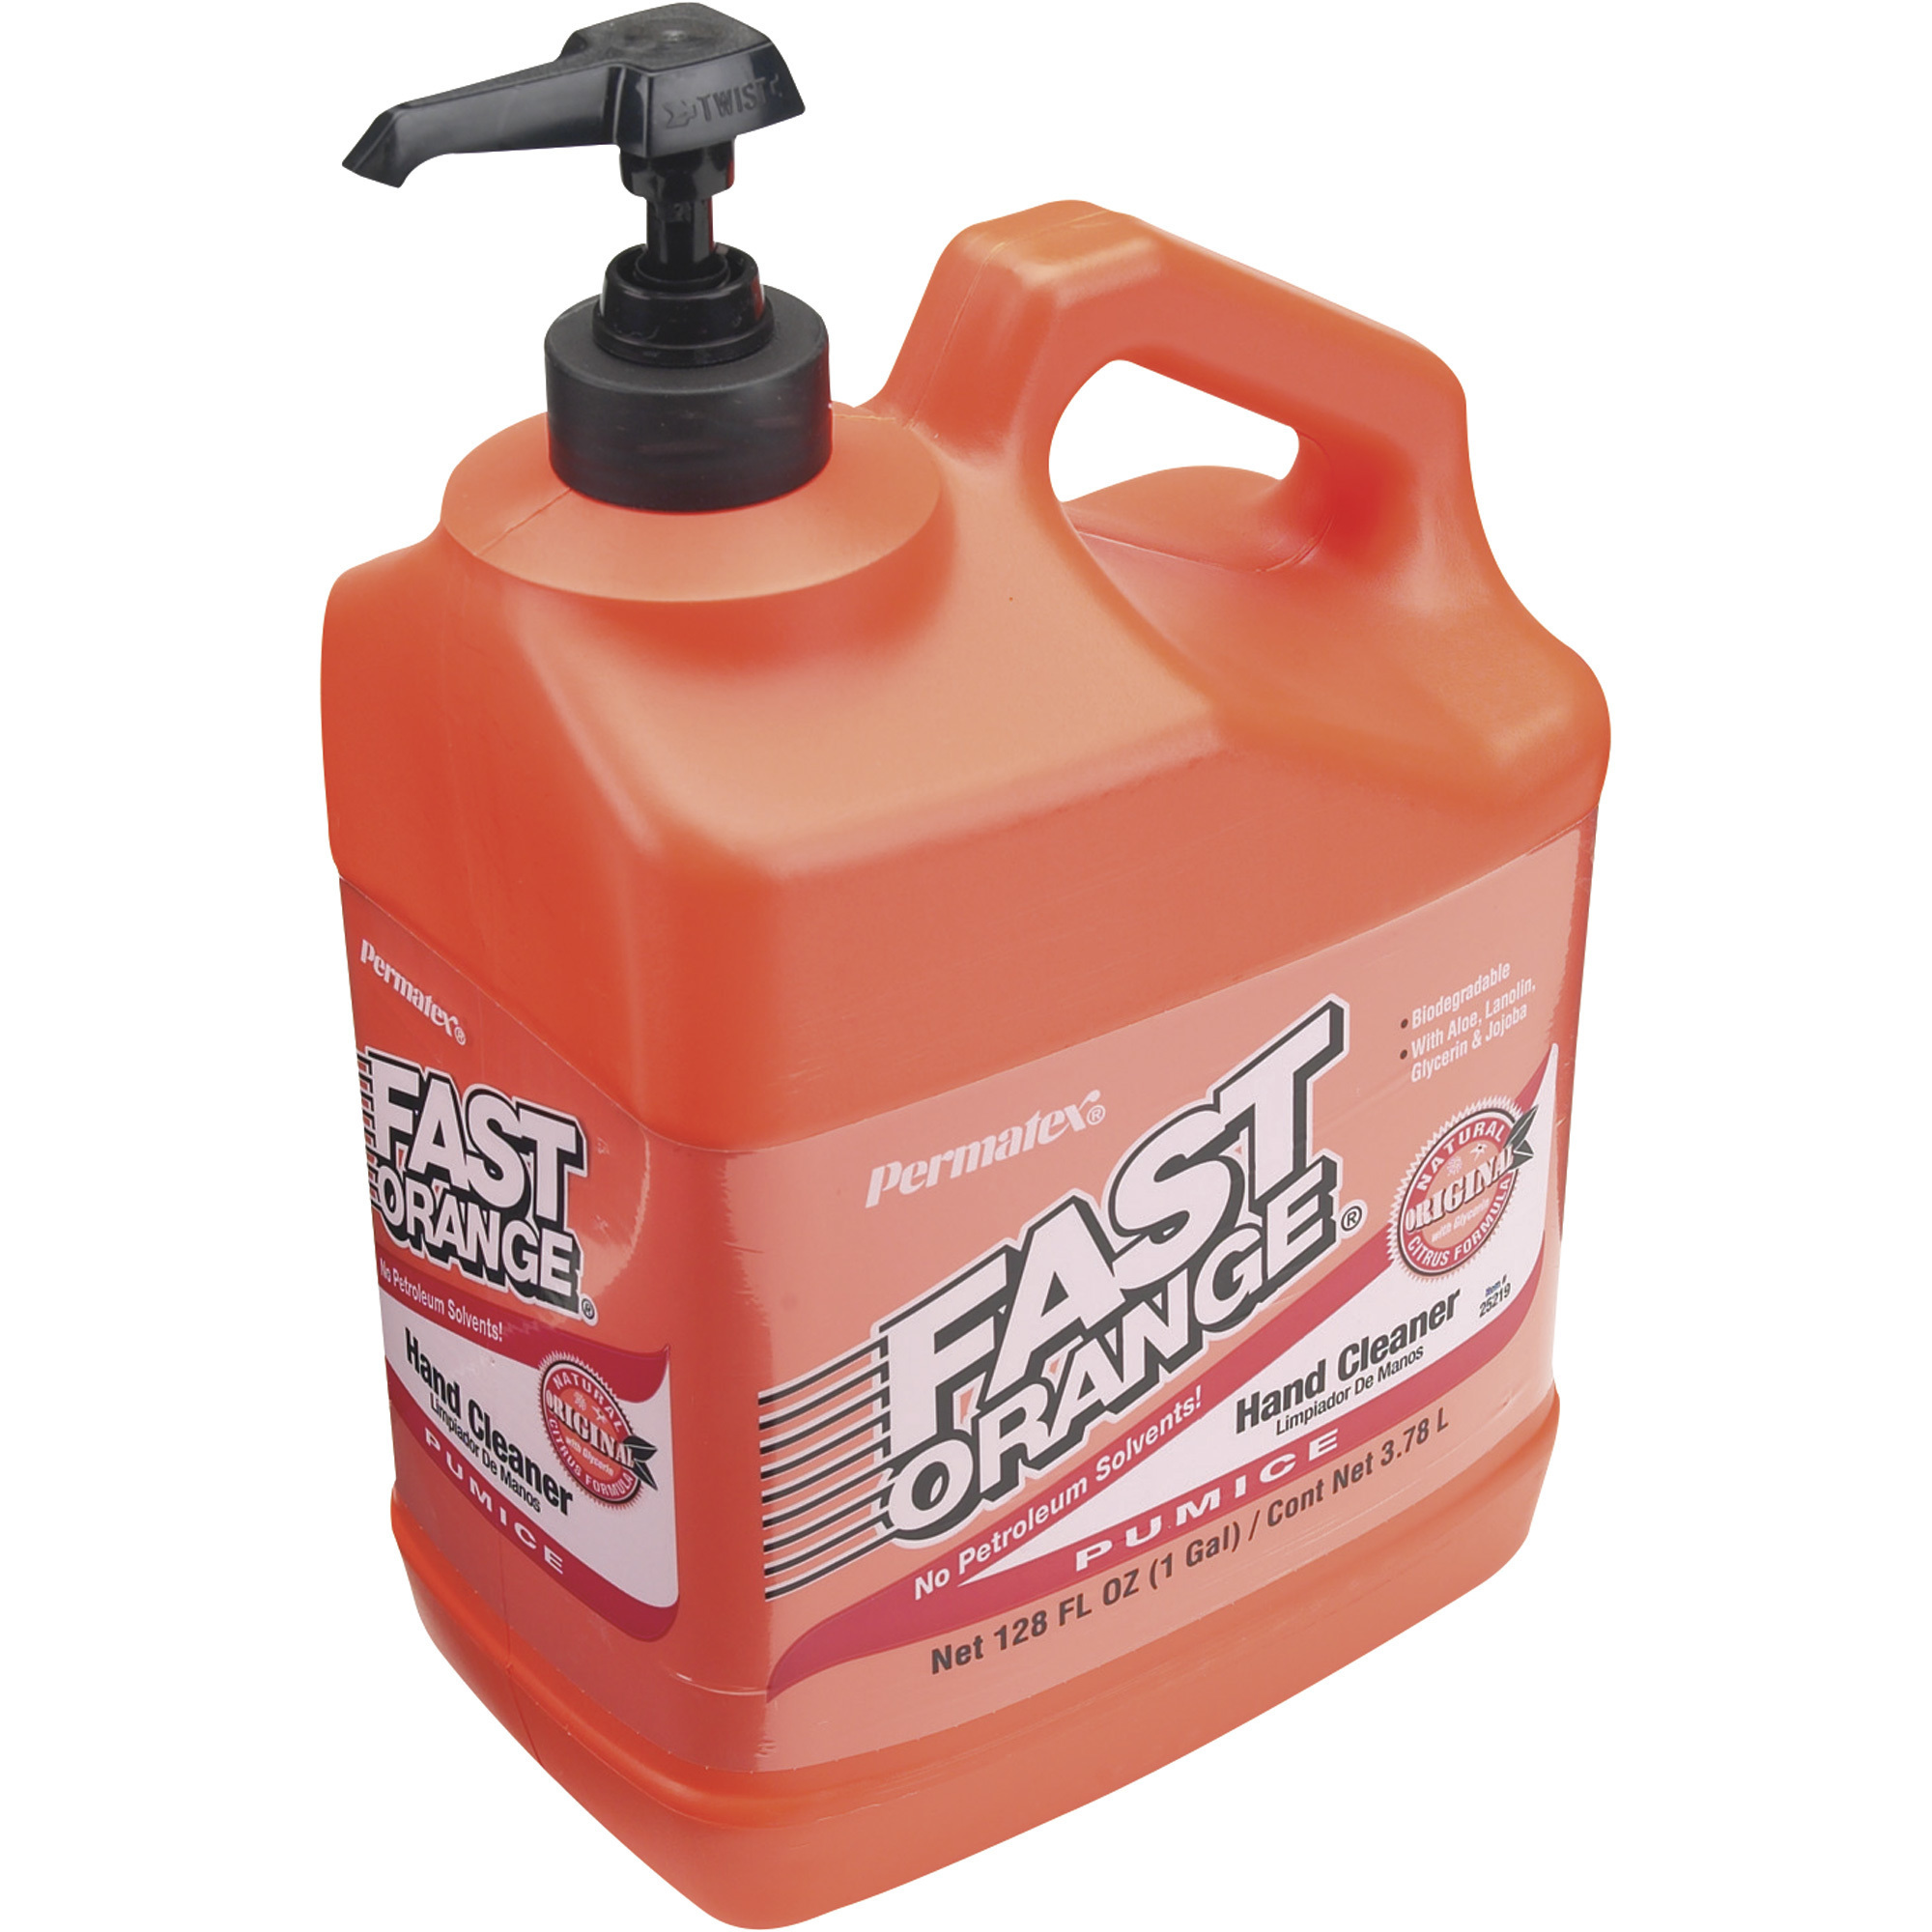 Fast Orange Pumice Hand Cleaner, Gallon